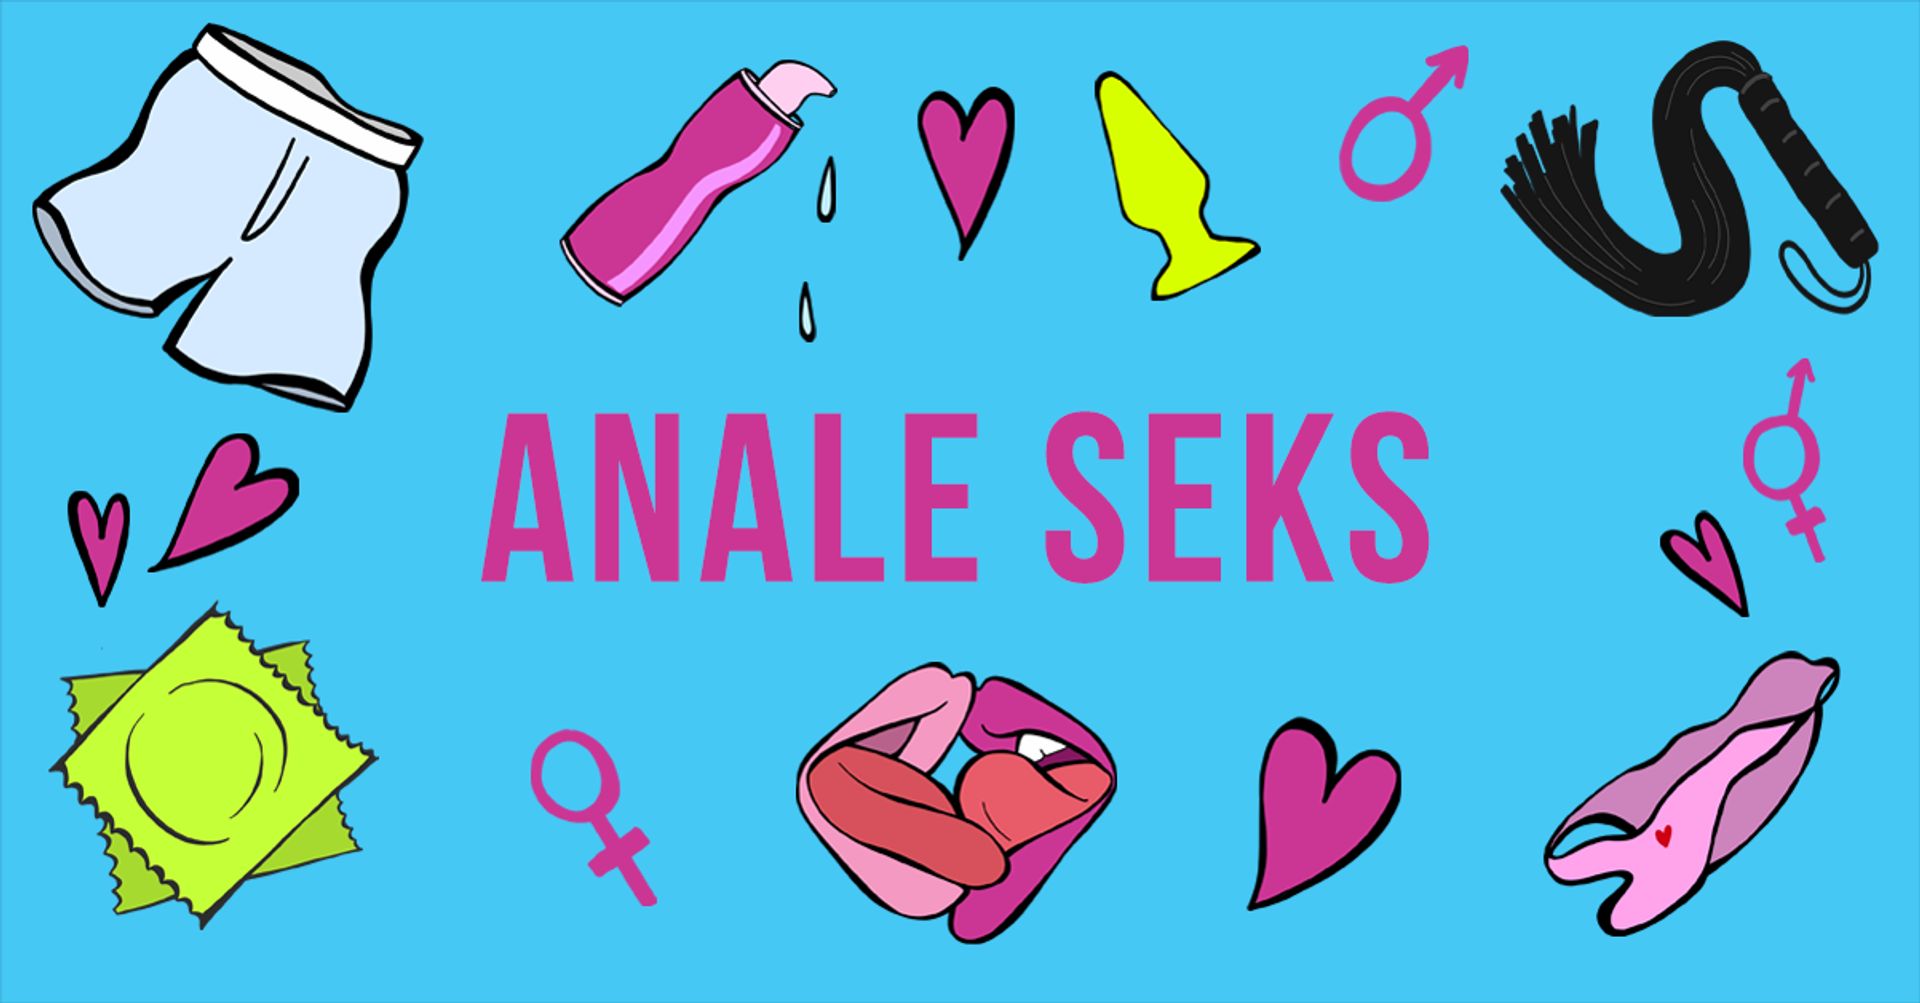 Anale seks - Seks and Drugs woordenboek - Spuiten en Slikken afbeelding